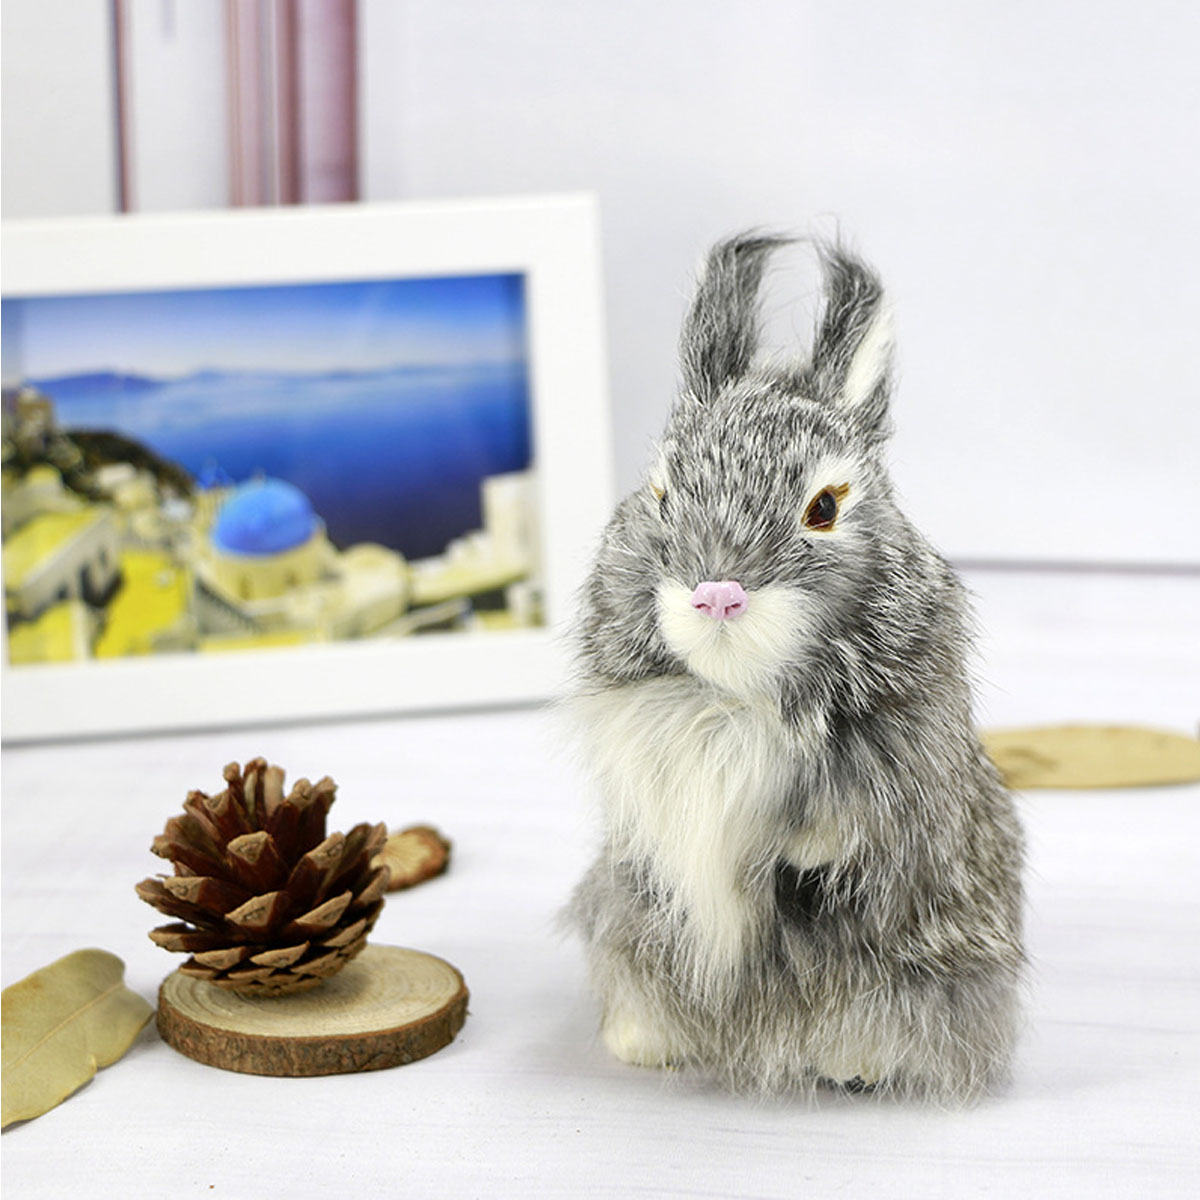 GrayYellowBrownWhite-Rabbits-Handmade-Easter-Bunnies-Home-Decorations-Desktop-Ornament-1452976-6